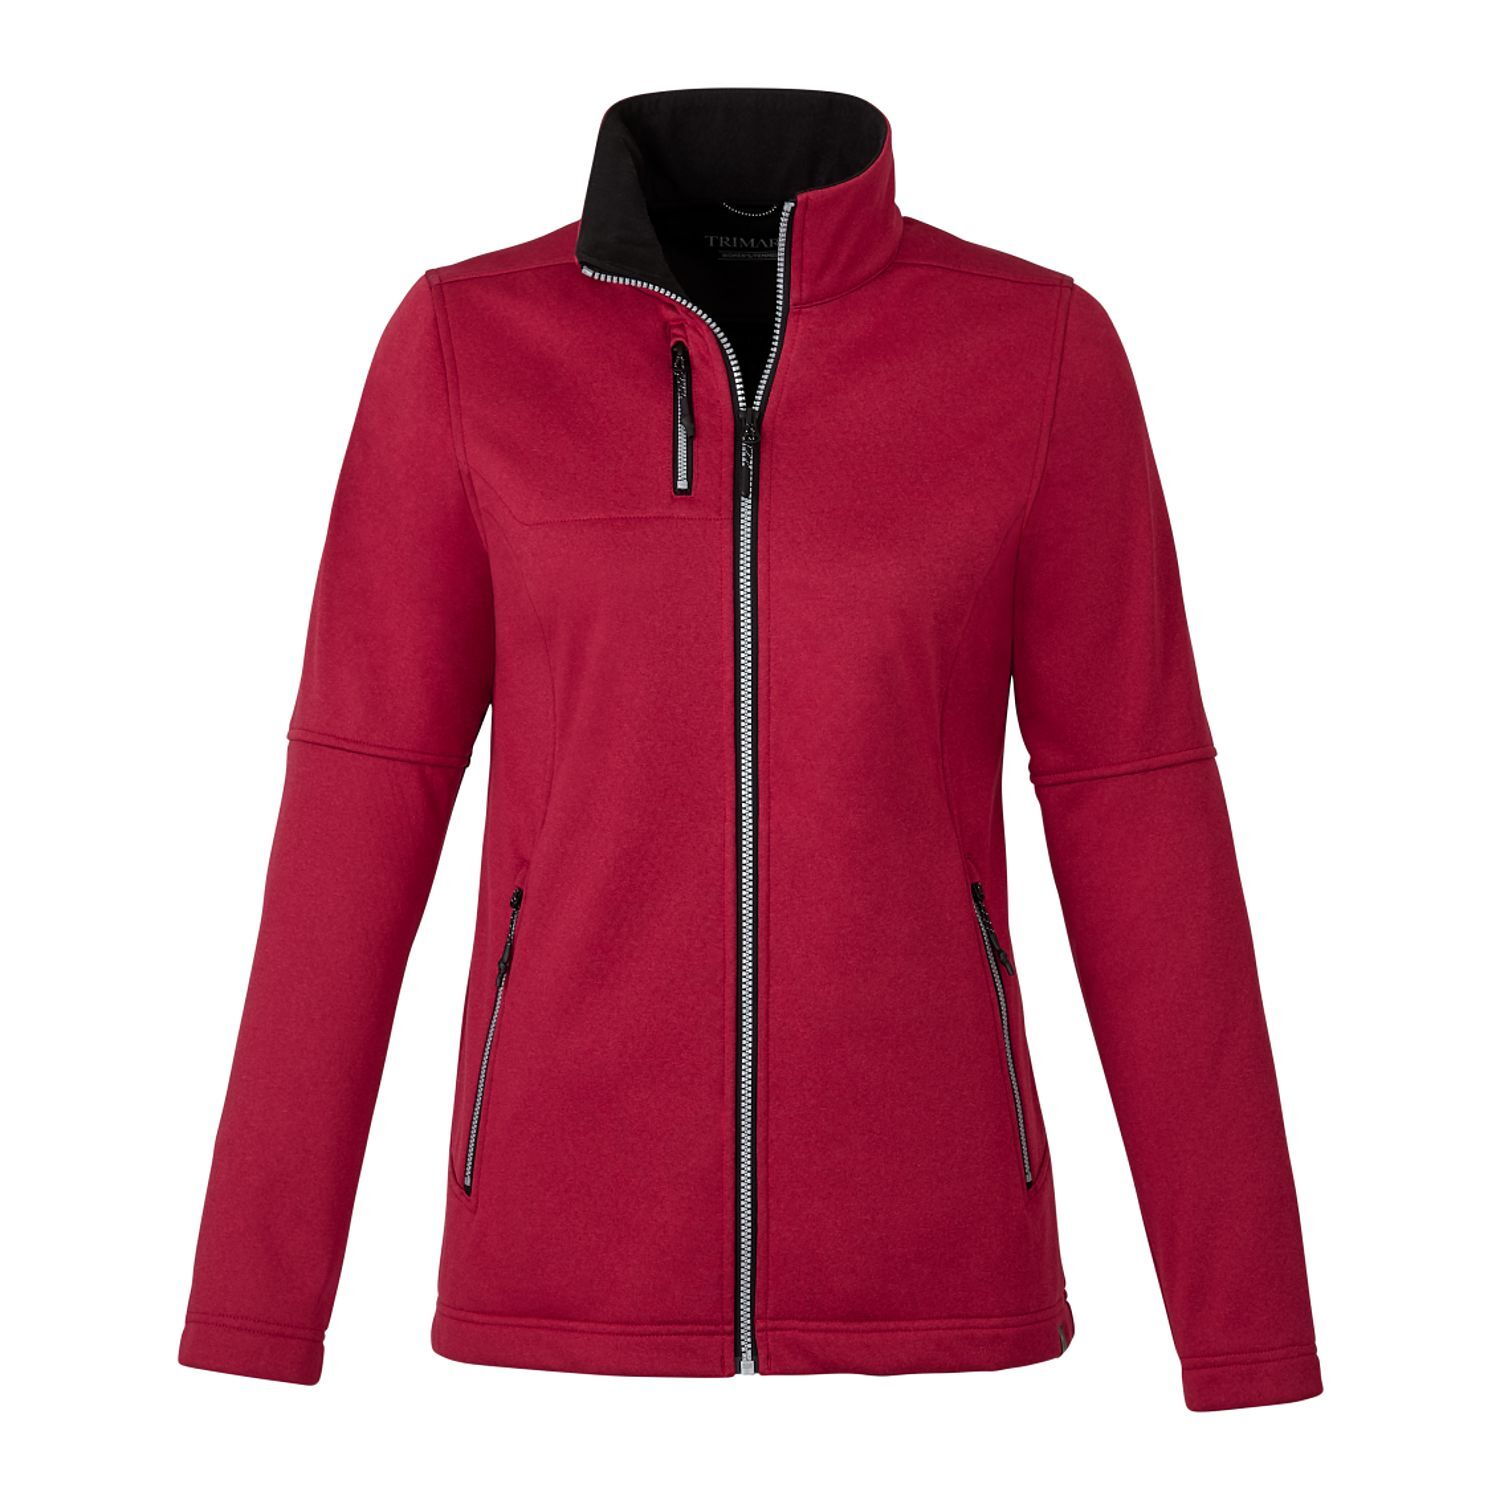 Custom Branded Women’s JORIS Eco Softshell Jacket - Vintage Red Heather